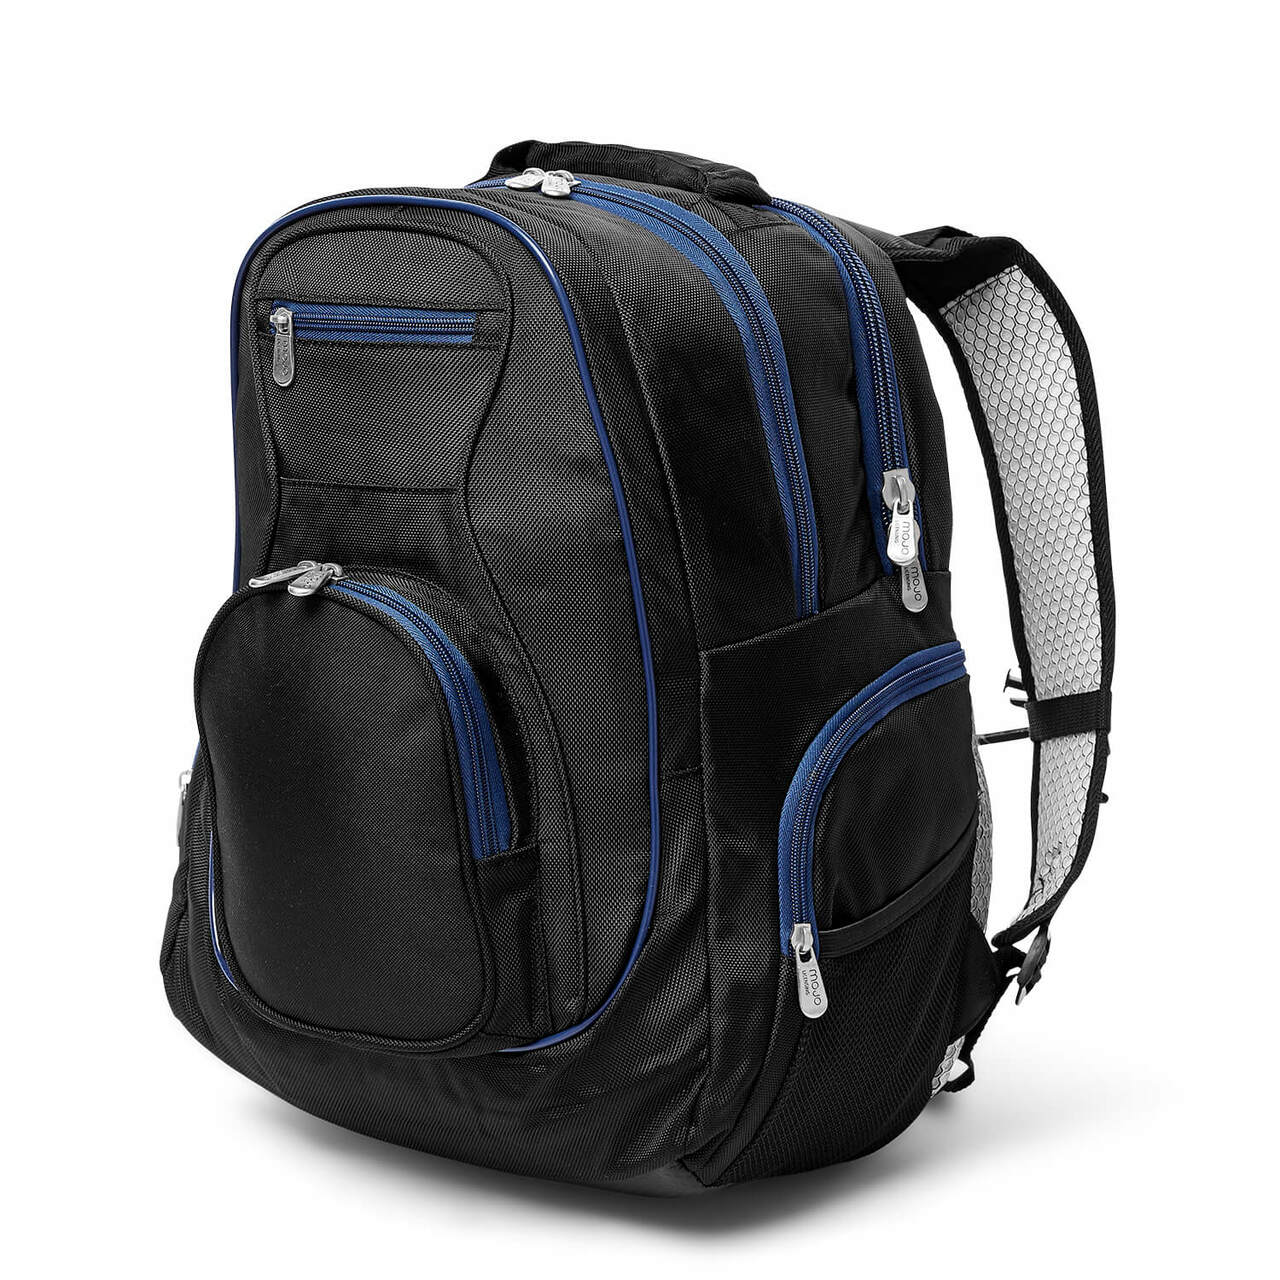 Royals Backpack | Kansas City Royals Laptop Backpack